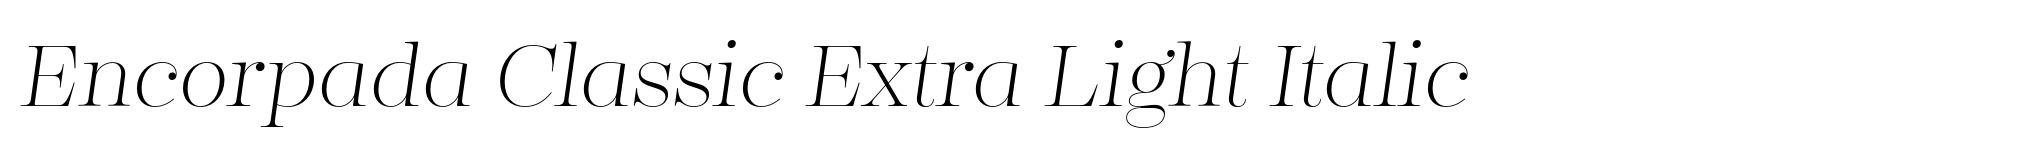 Encorpada Classic Extra Light Italic image